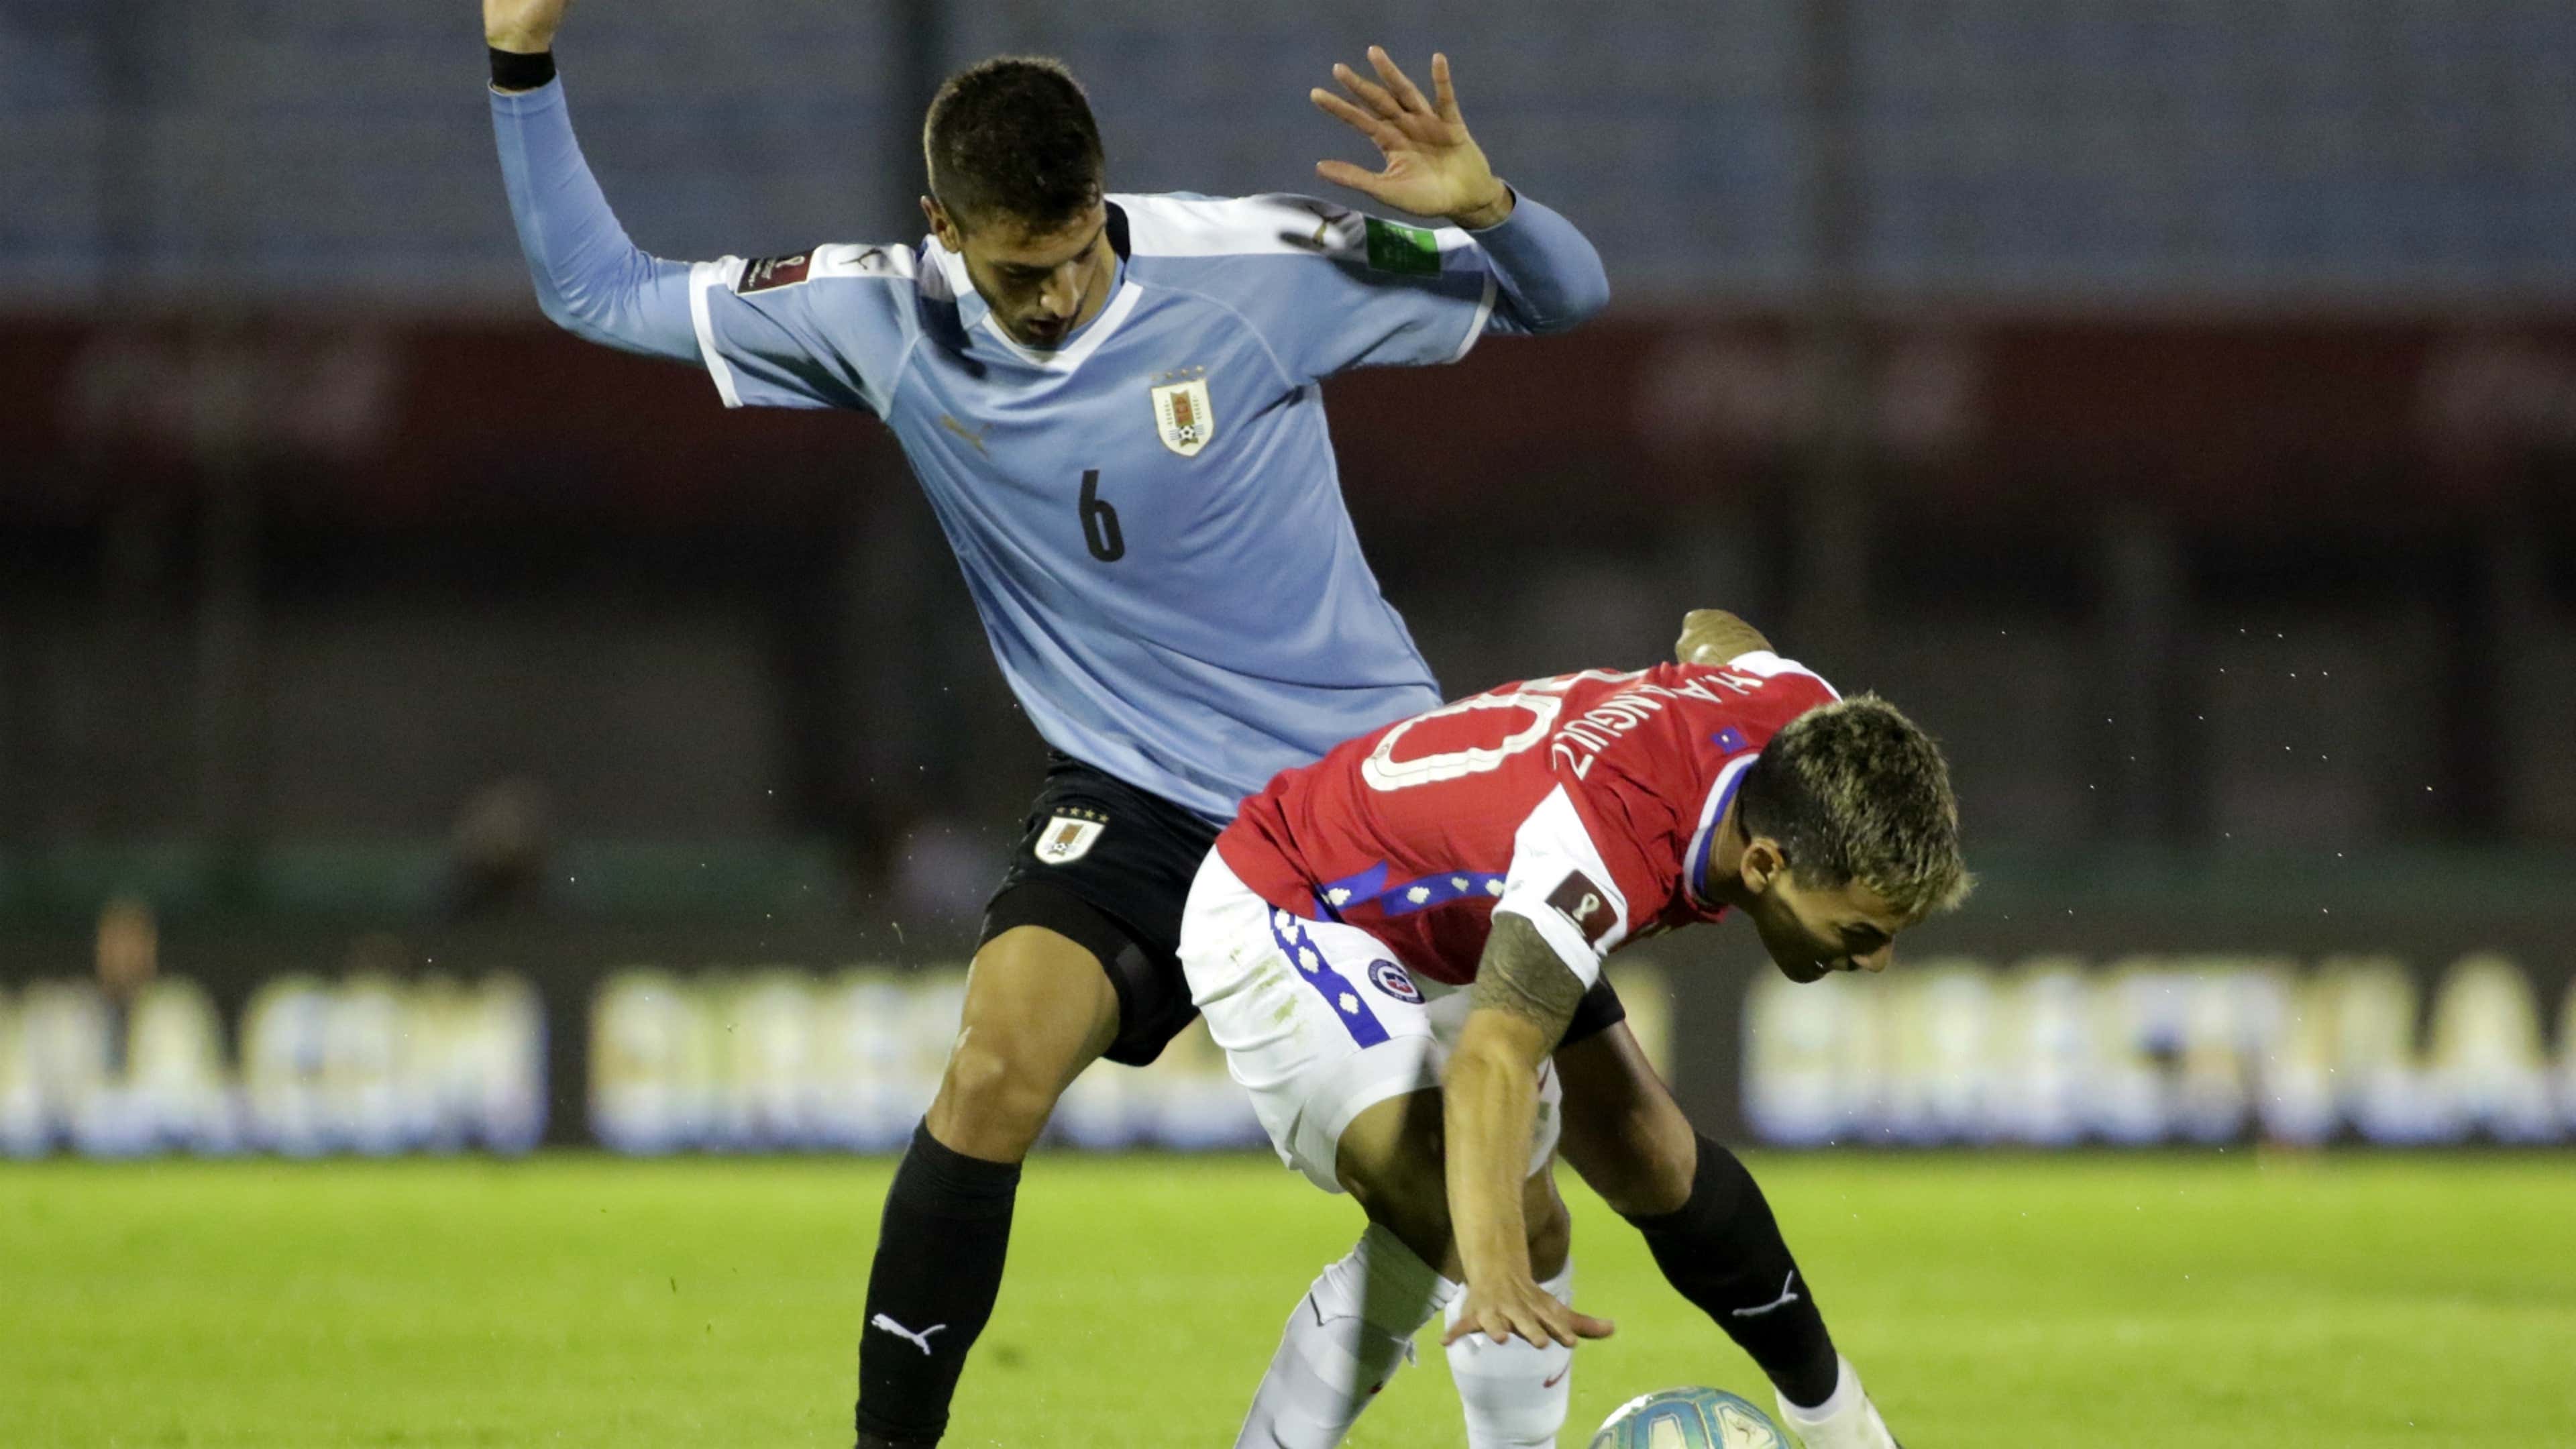 EN VIVO: Uruguay vs Chile online gratis minuto a minuto